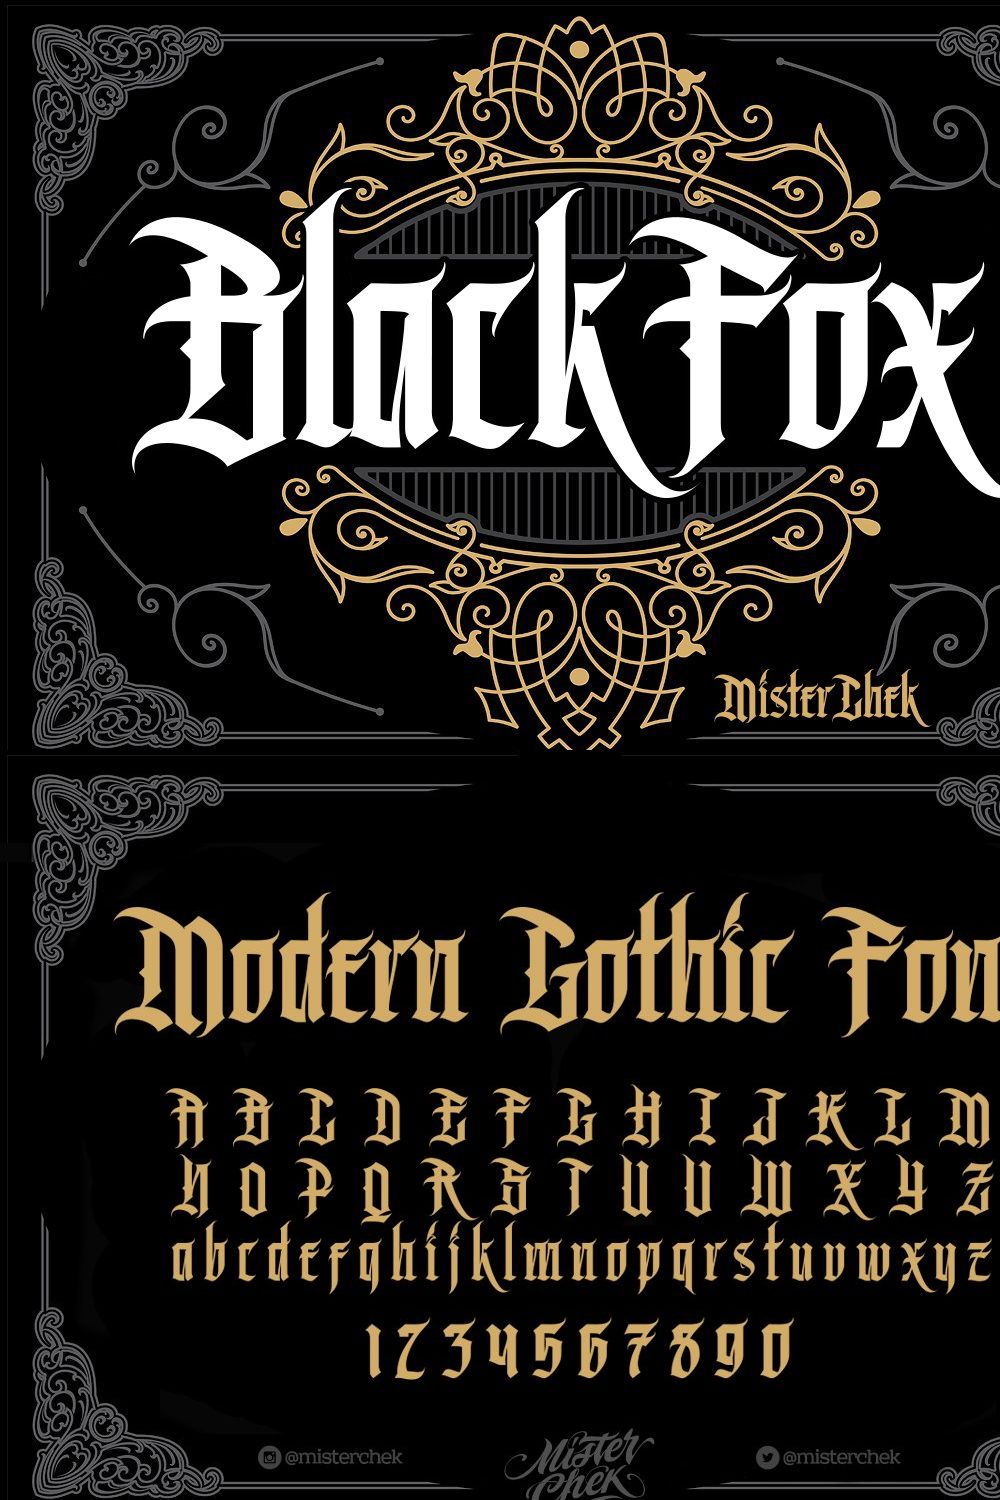 Black Fox pinterest preview image.